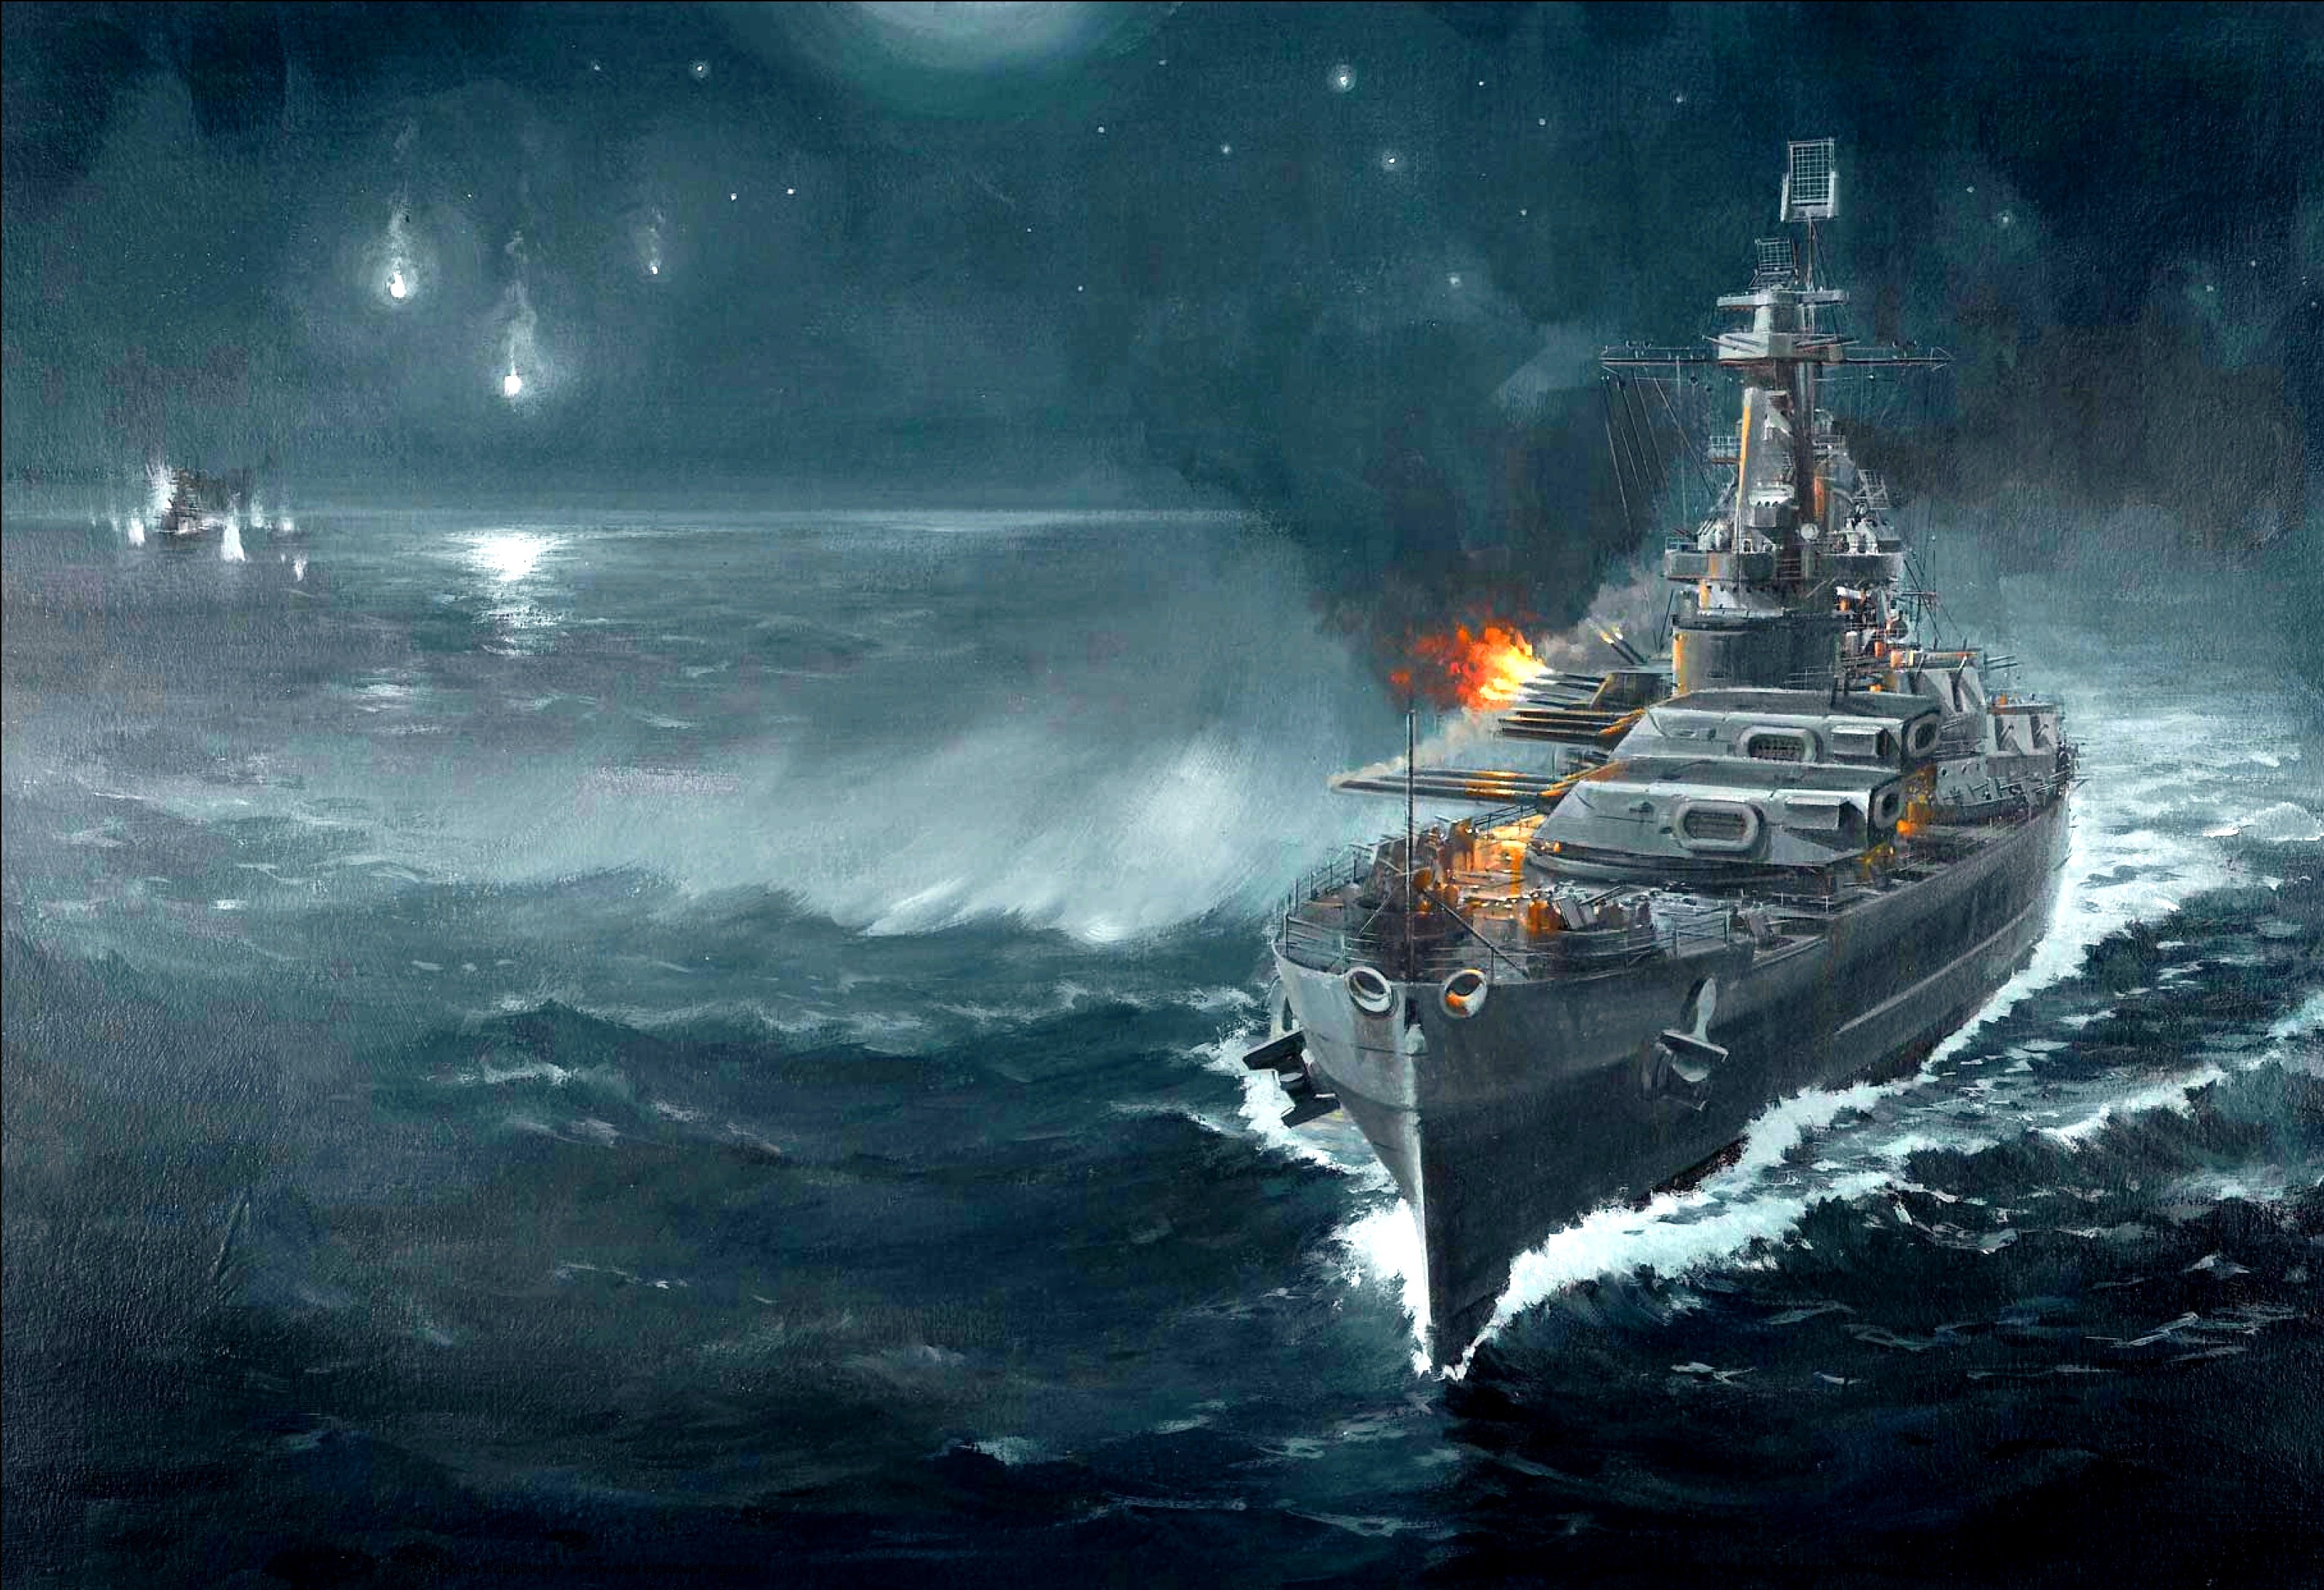 Battleship Wallpaper. Battleship War Wallpaper, Battleship Post Apocalyptic Wallpaper And Battleship Wallpaper